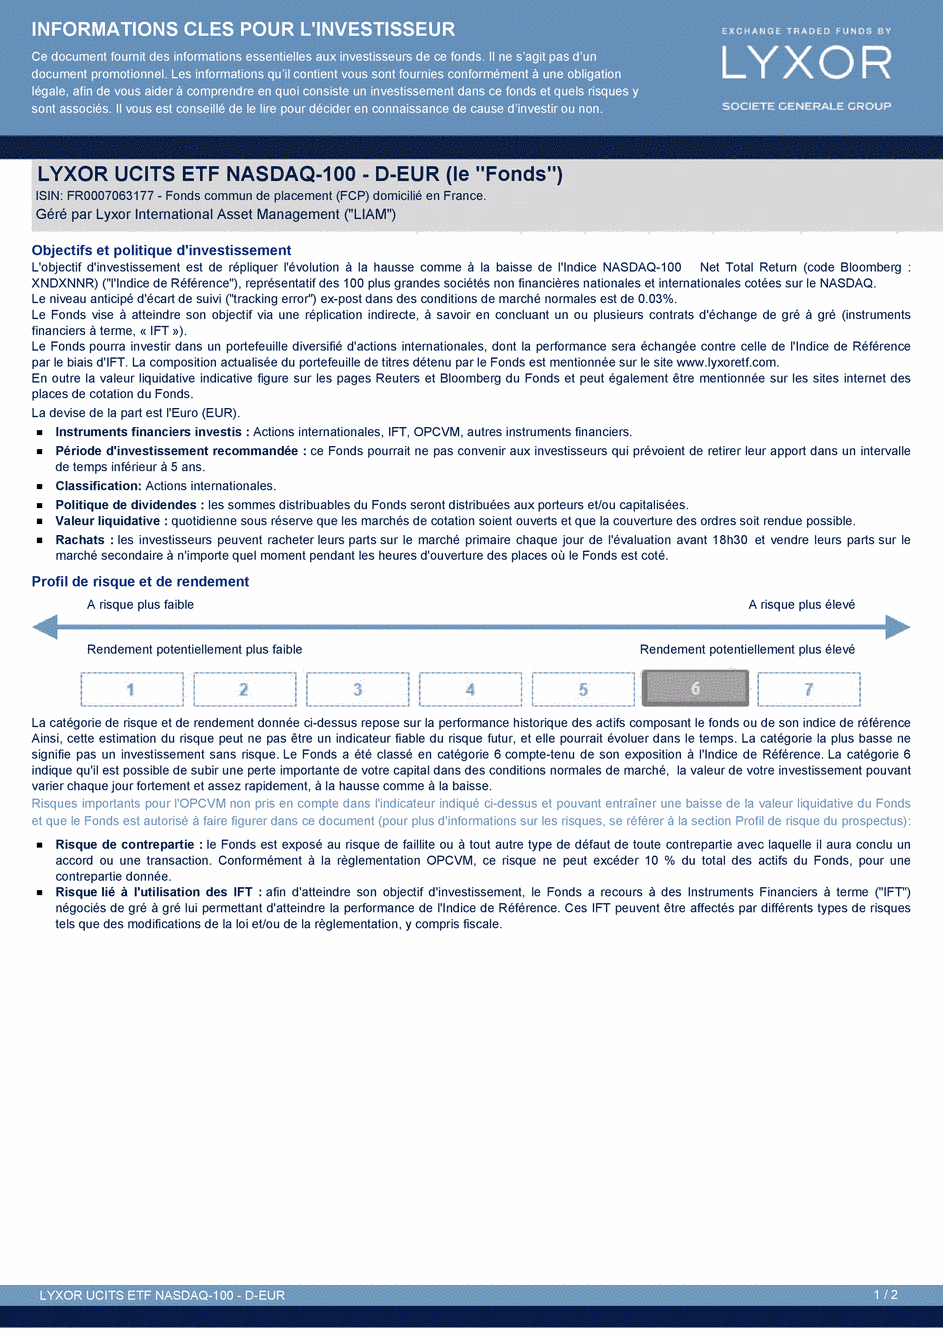 DICI LYXOR NASDAQ-100 UCITS ETF D-EUR - 24/02/2015 - Français